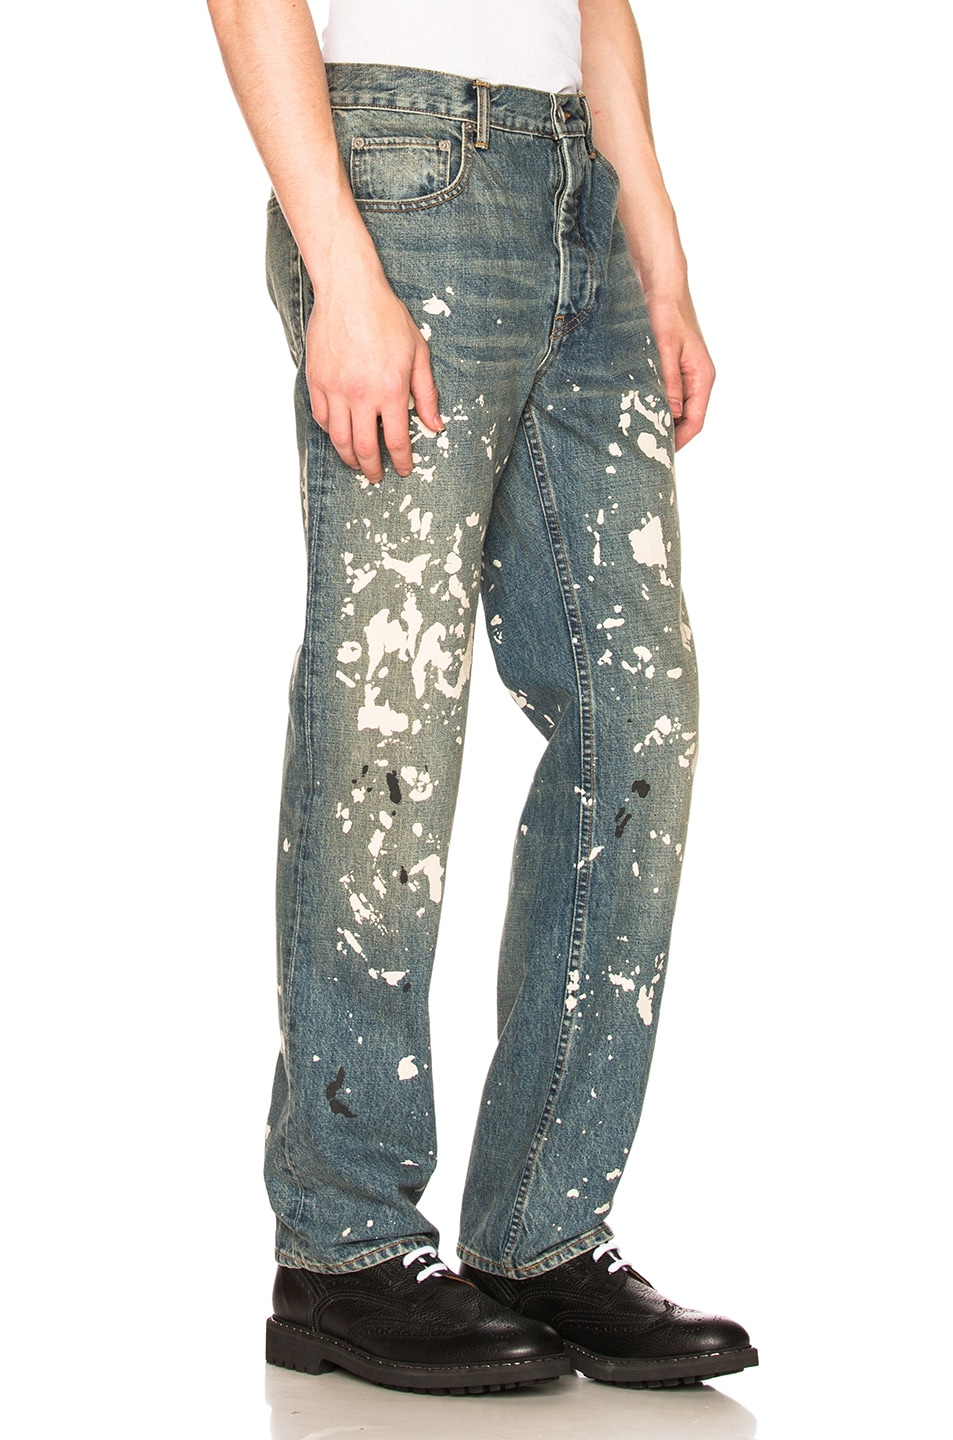 Helmut Lang Re-Edition Painter Jeans in Paint Splatter | FWRD